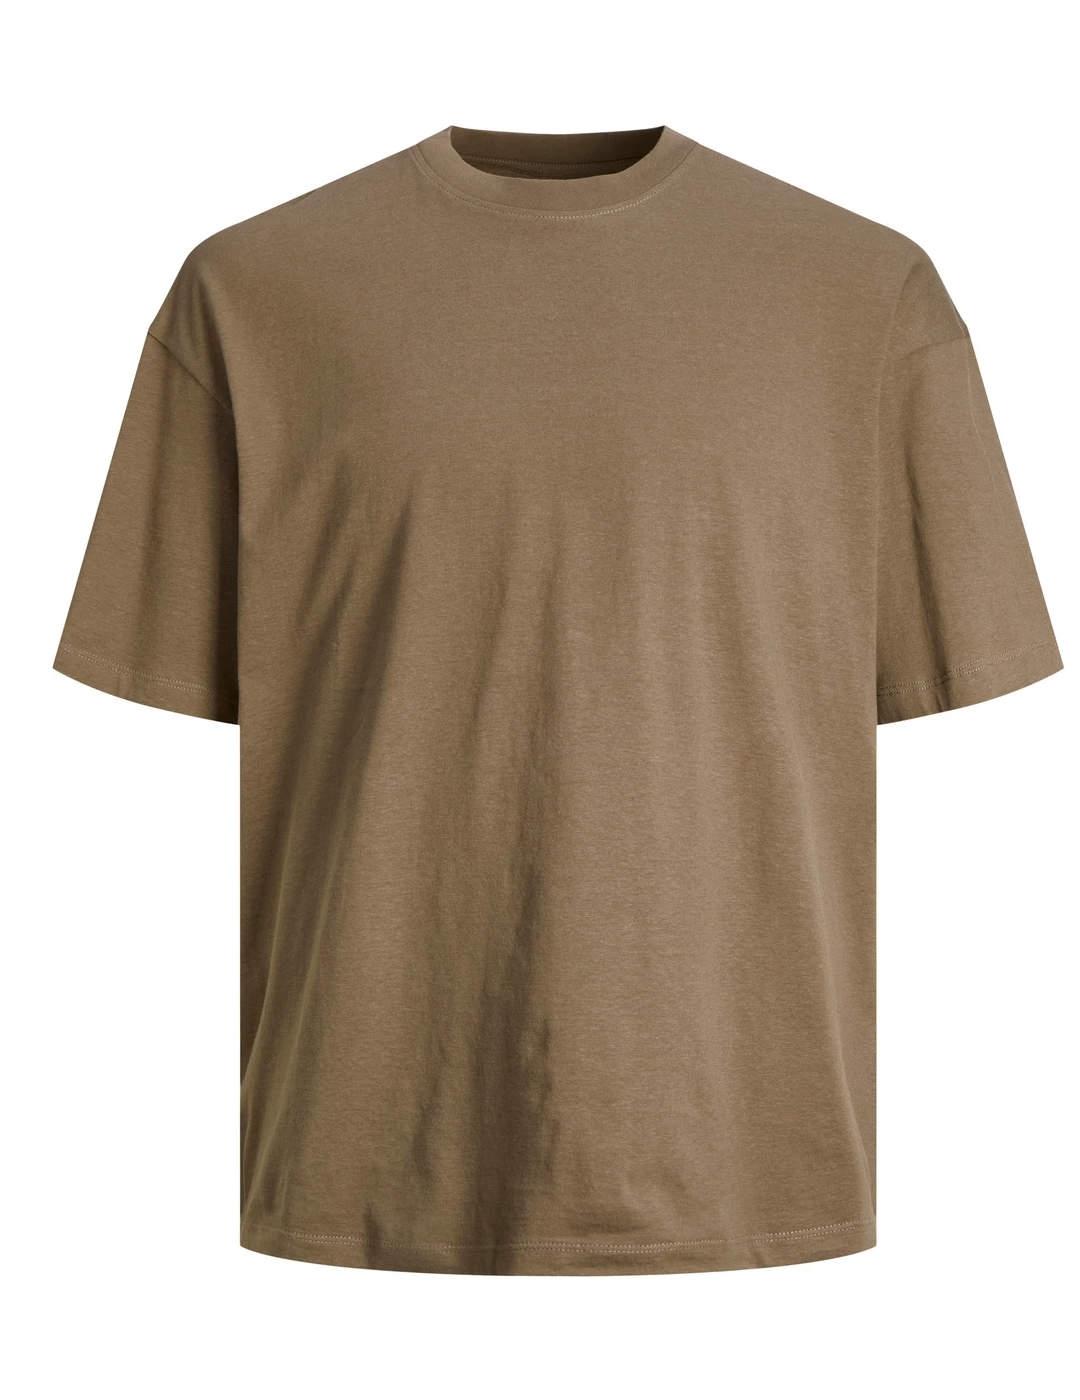 Camiseta Jack&Jones Brandley marrón manga corta para hombre